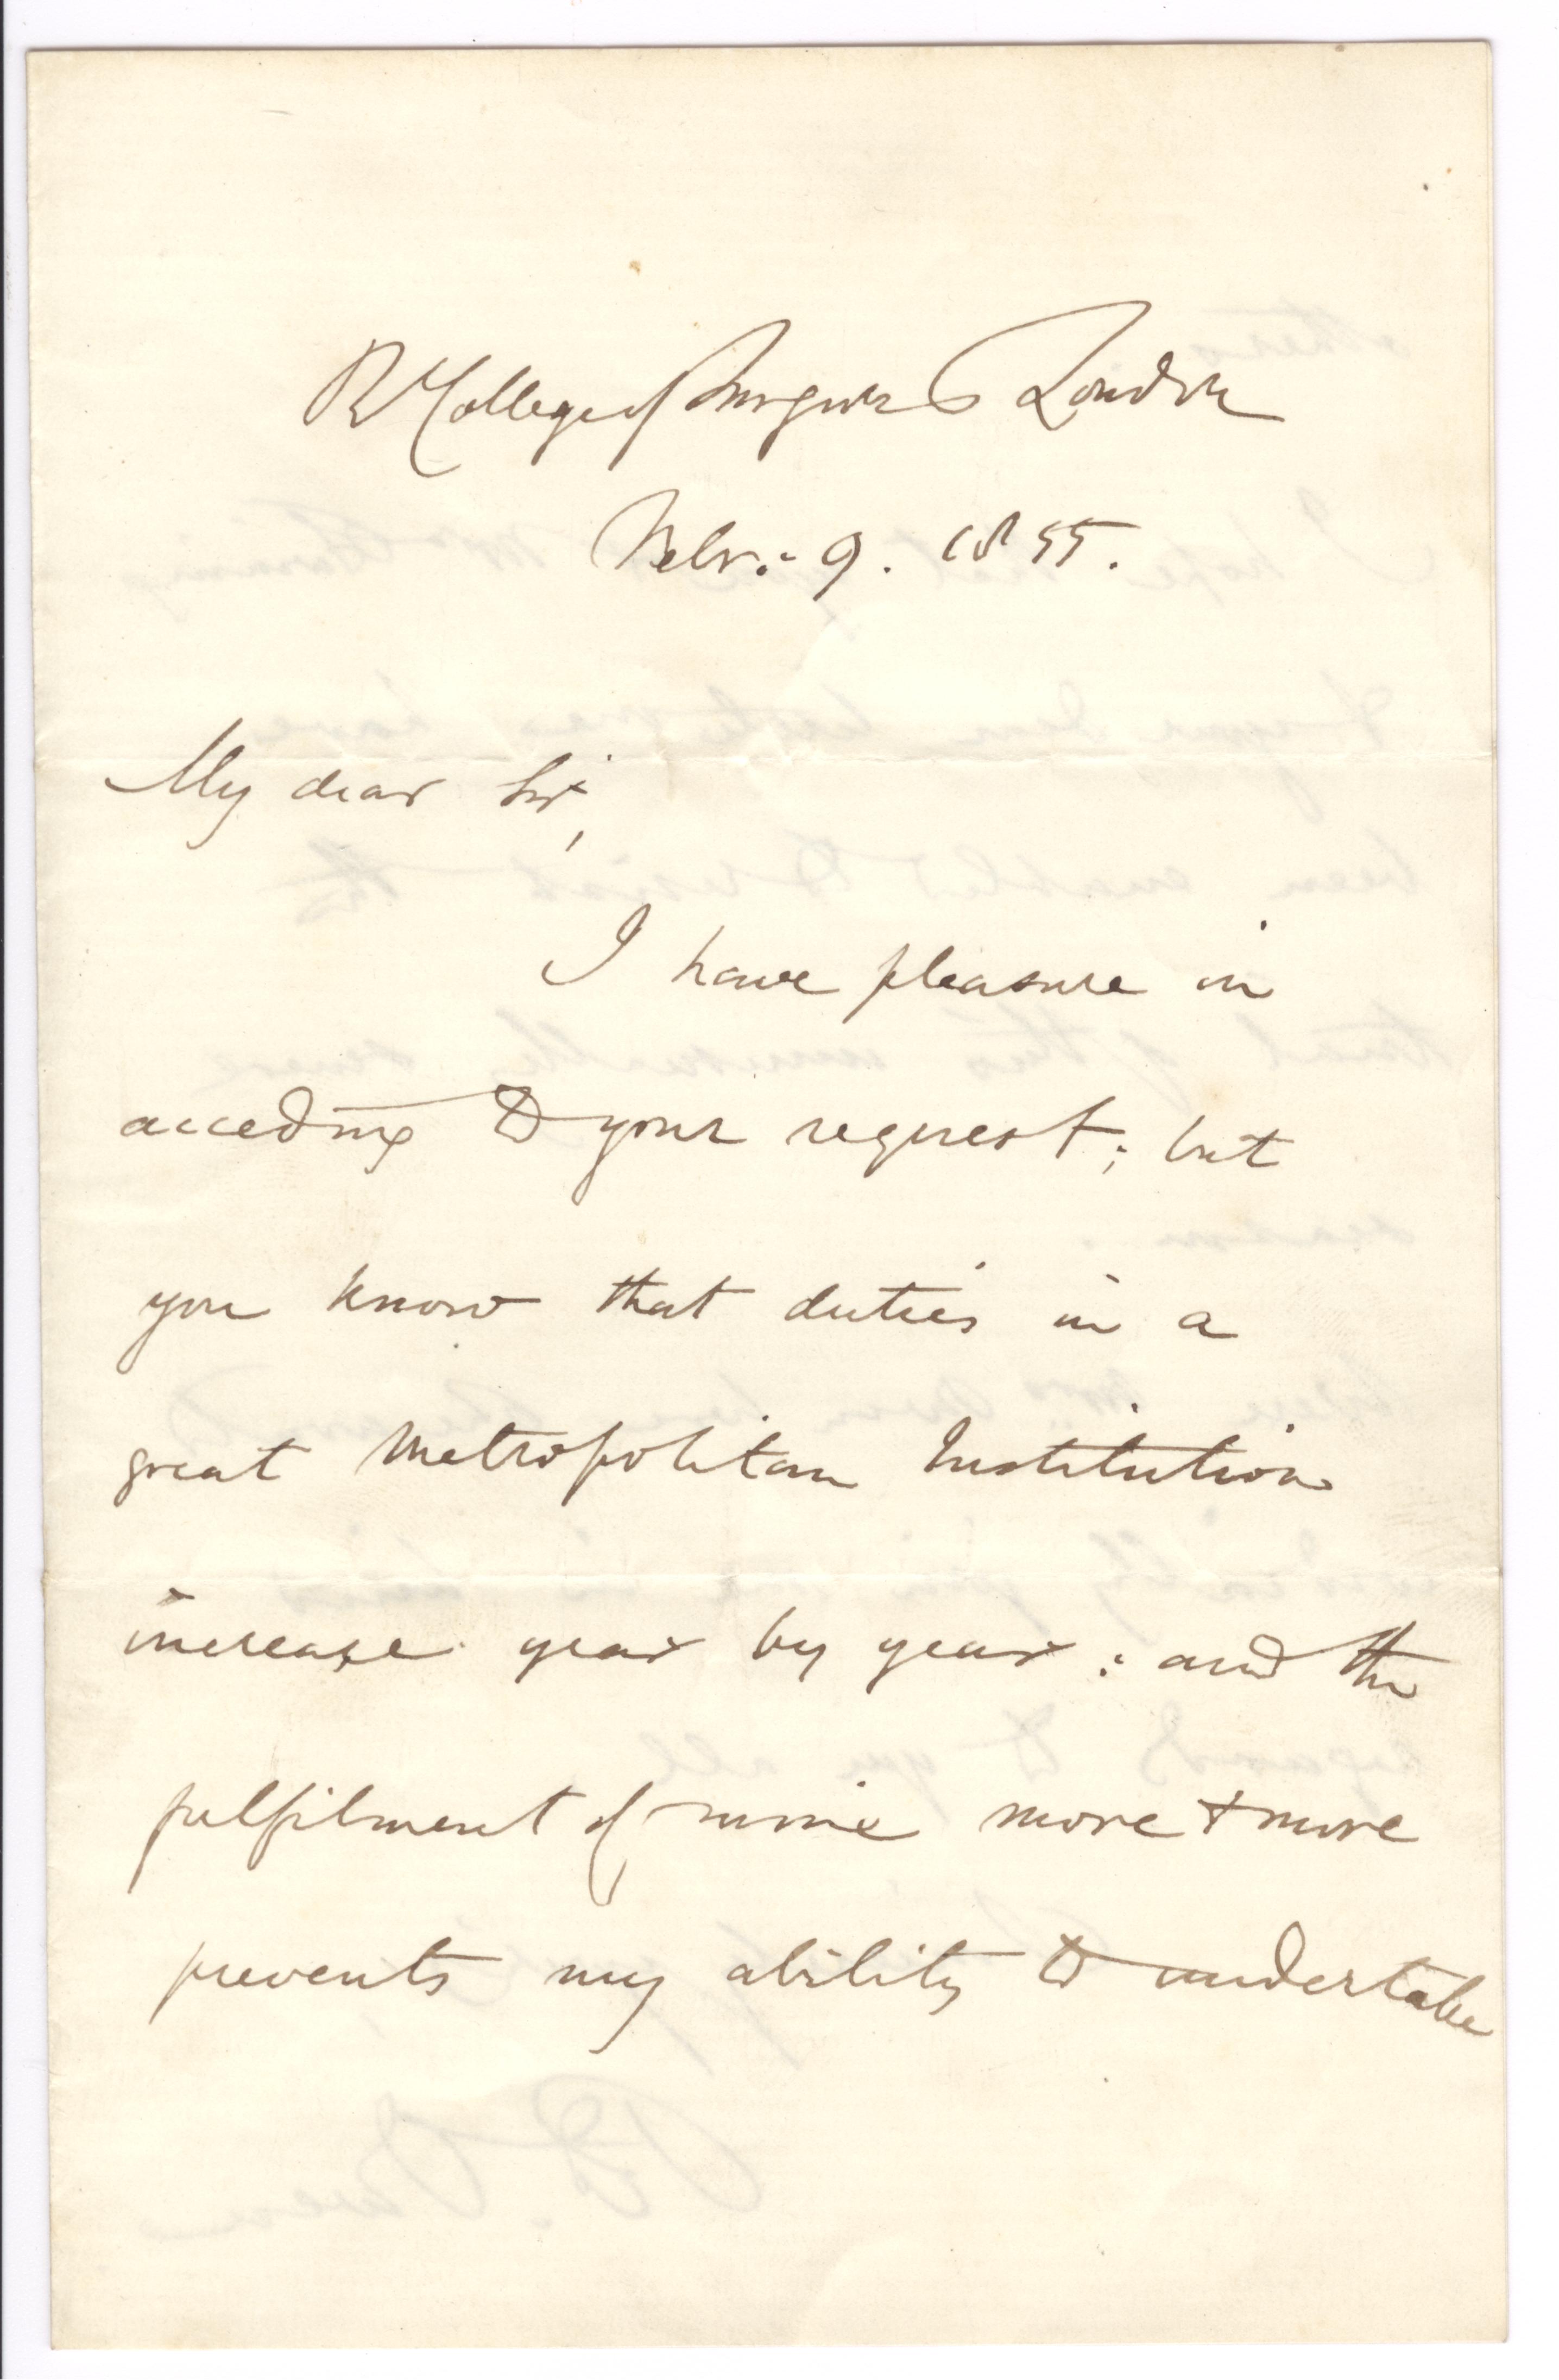 Sir Richard Owen Letter